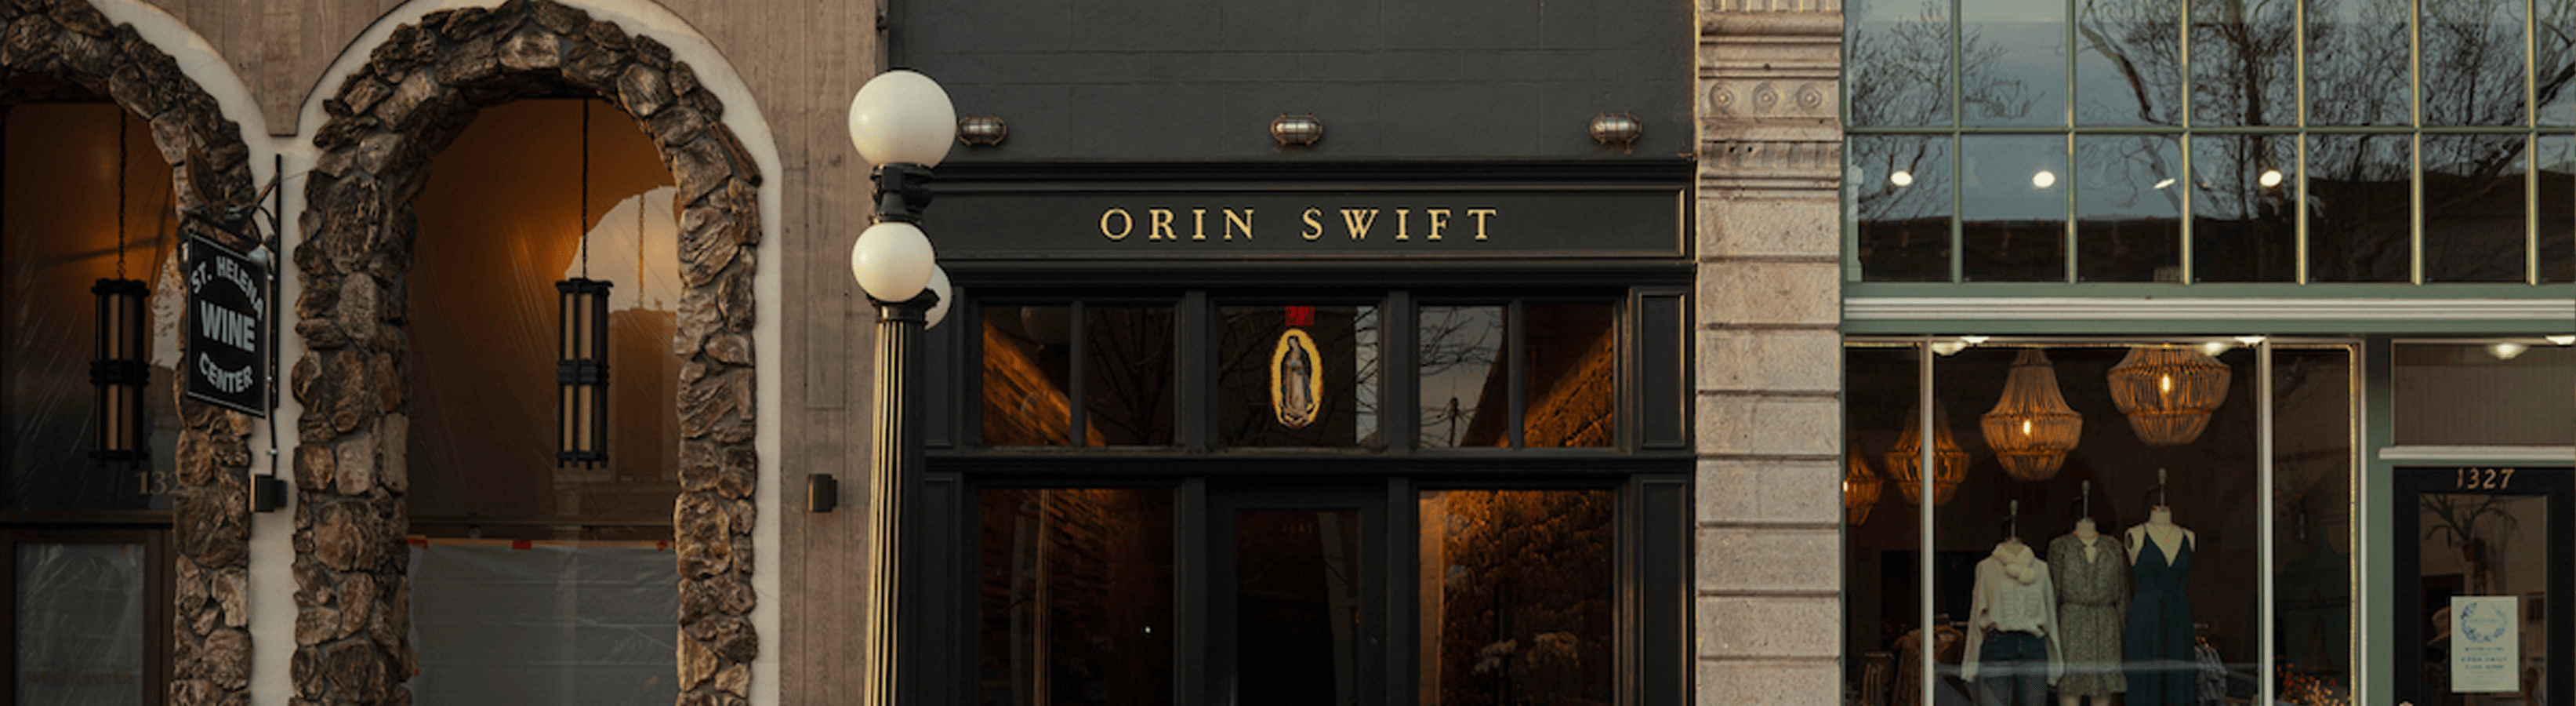 orin swift cellars abstract